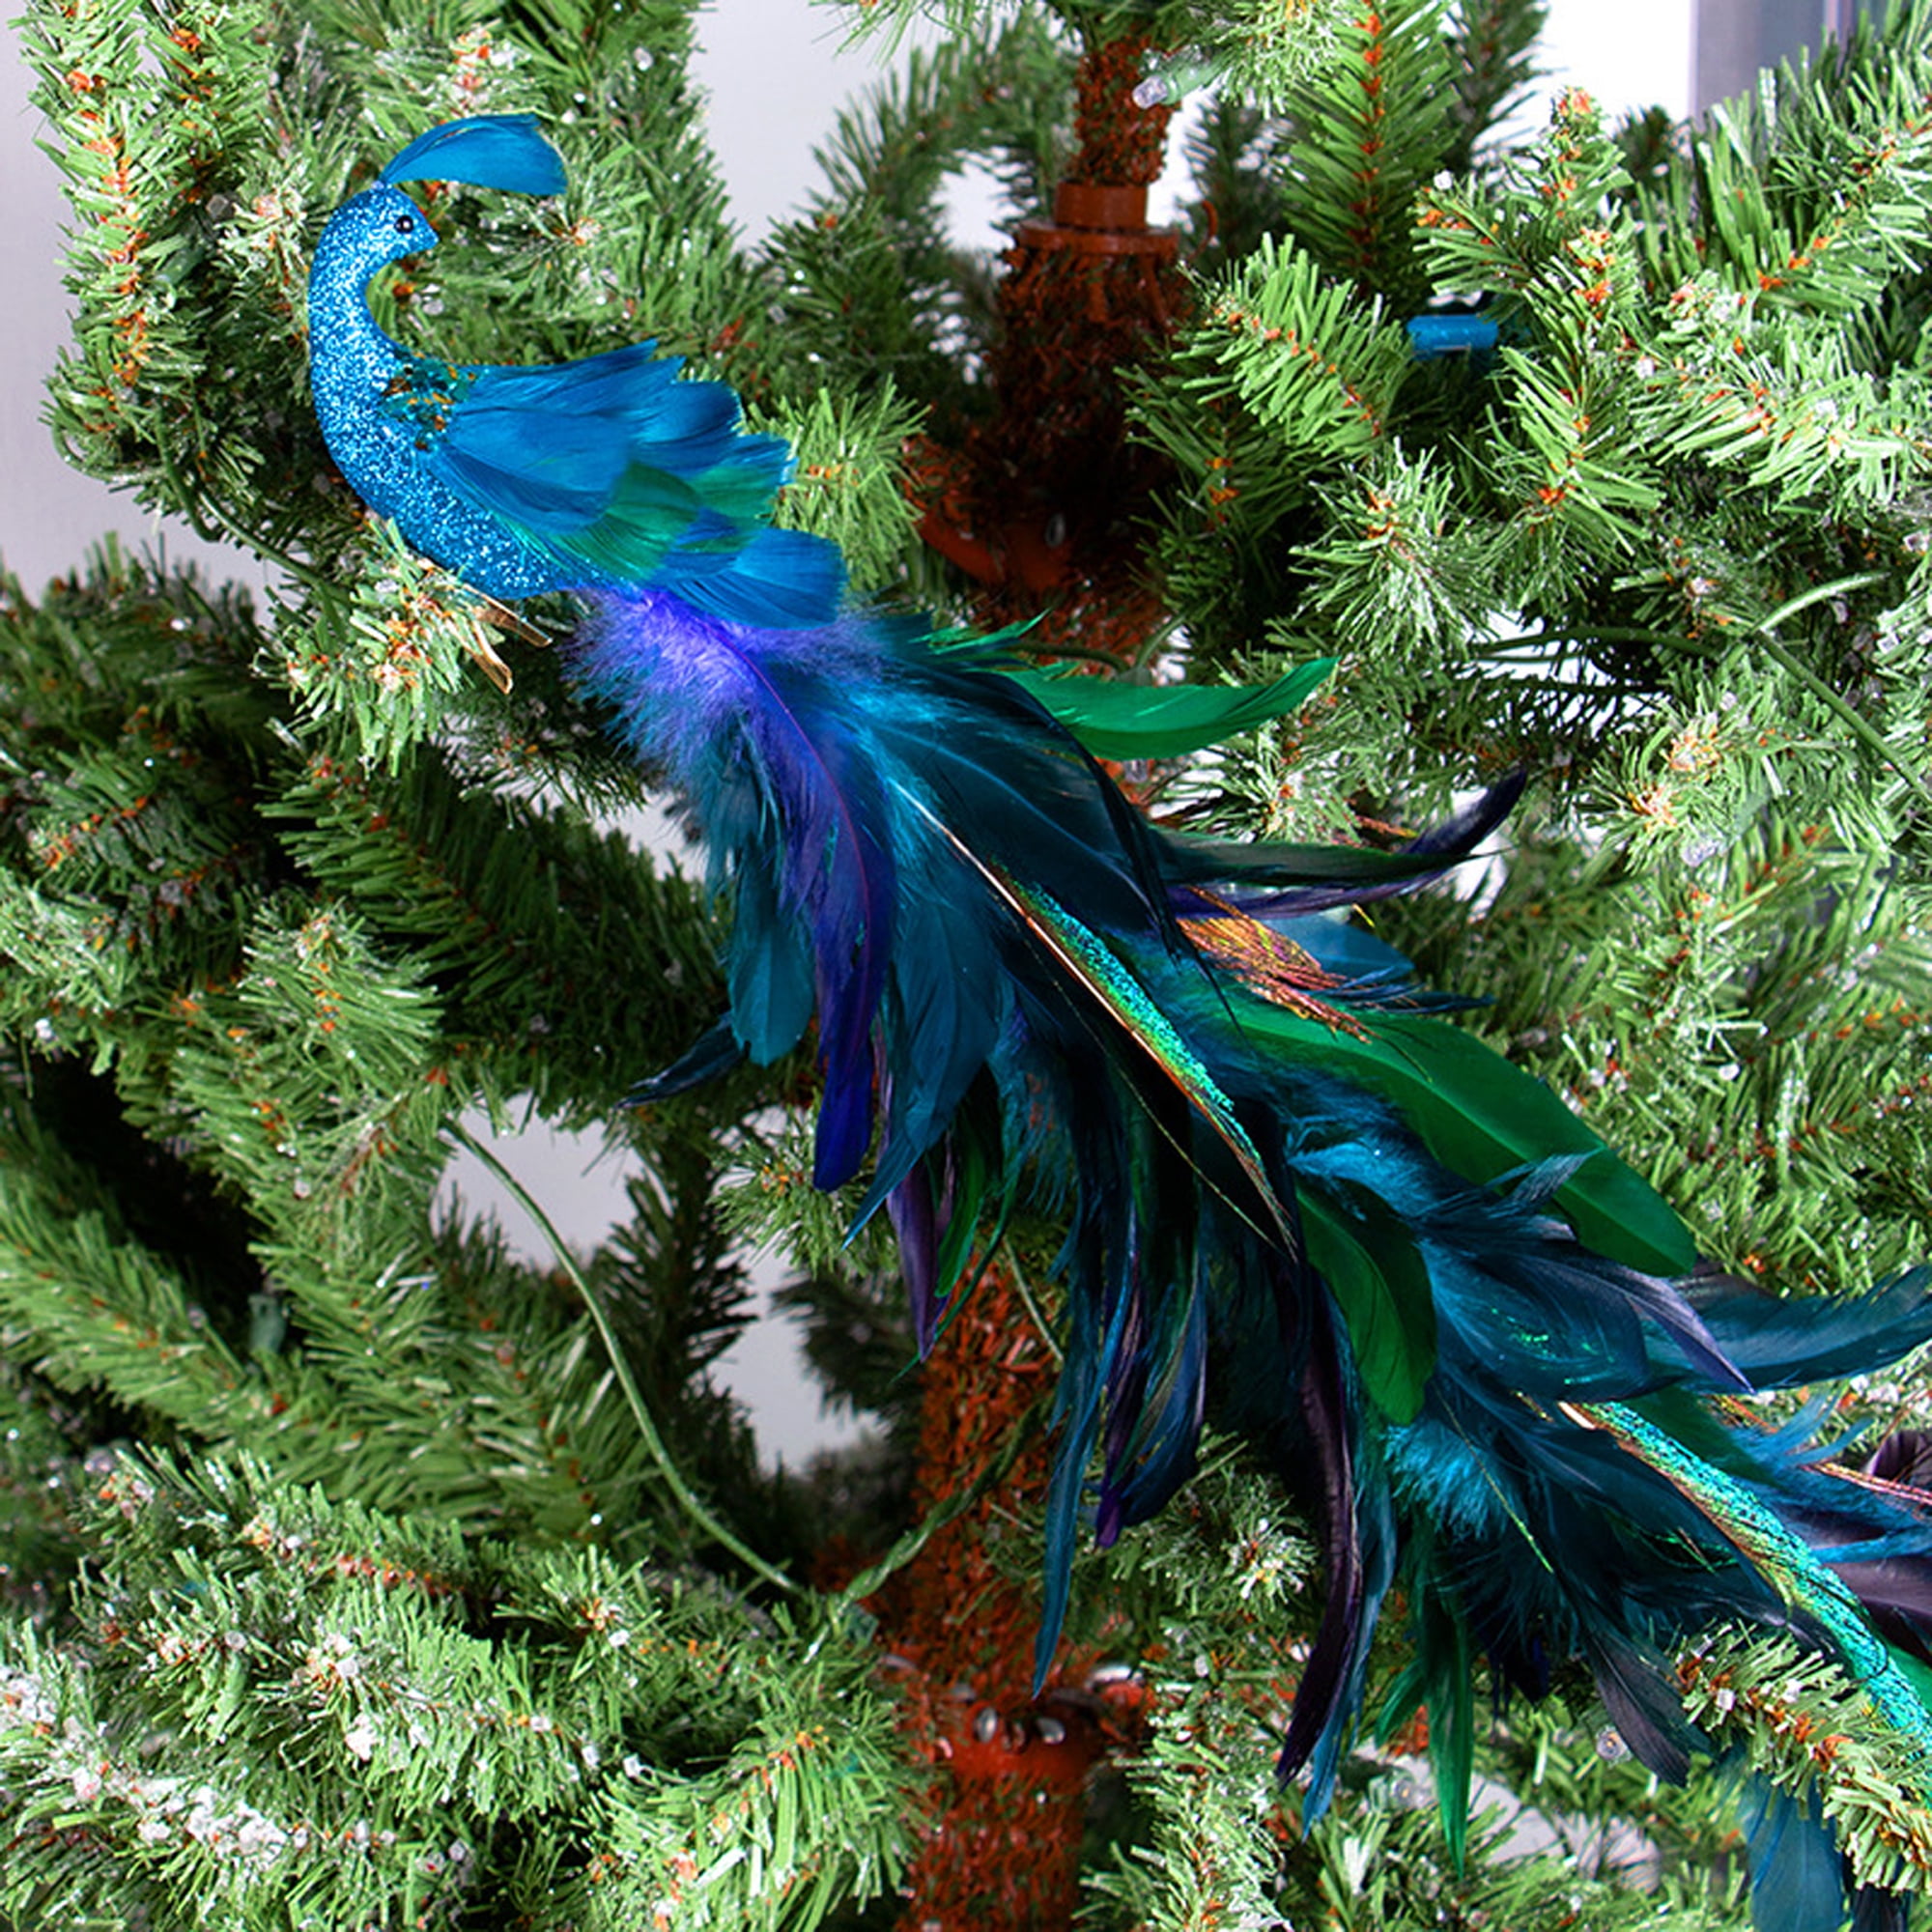 KelaJuan Faux Peacock Ornaments Glitter Blue Peacock Ornaments